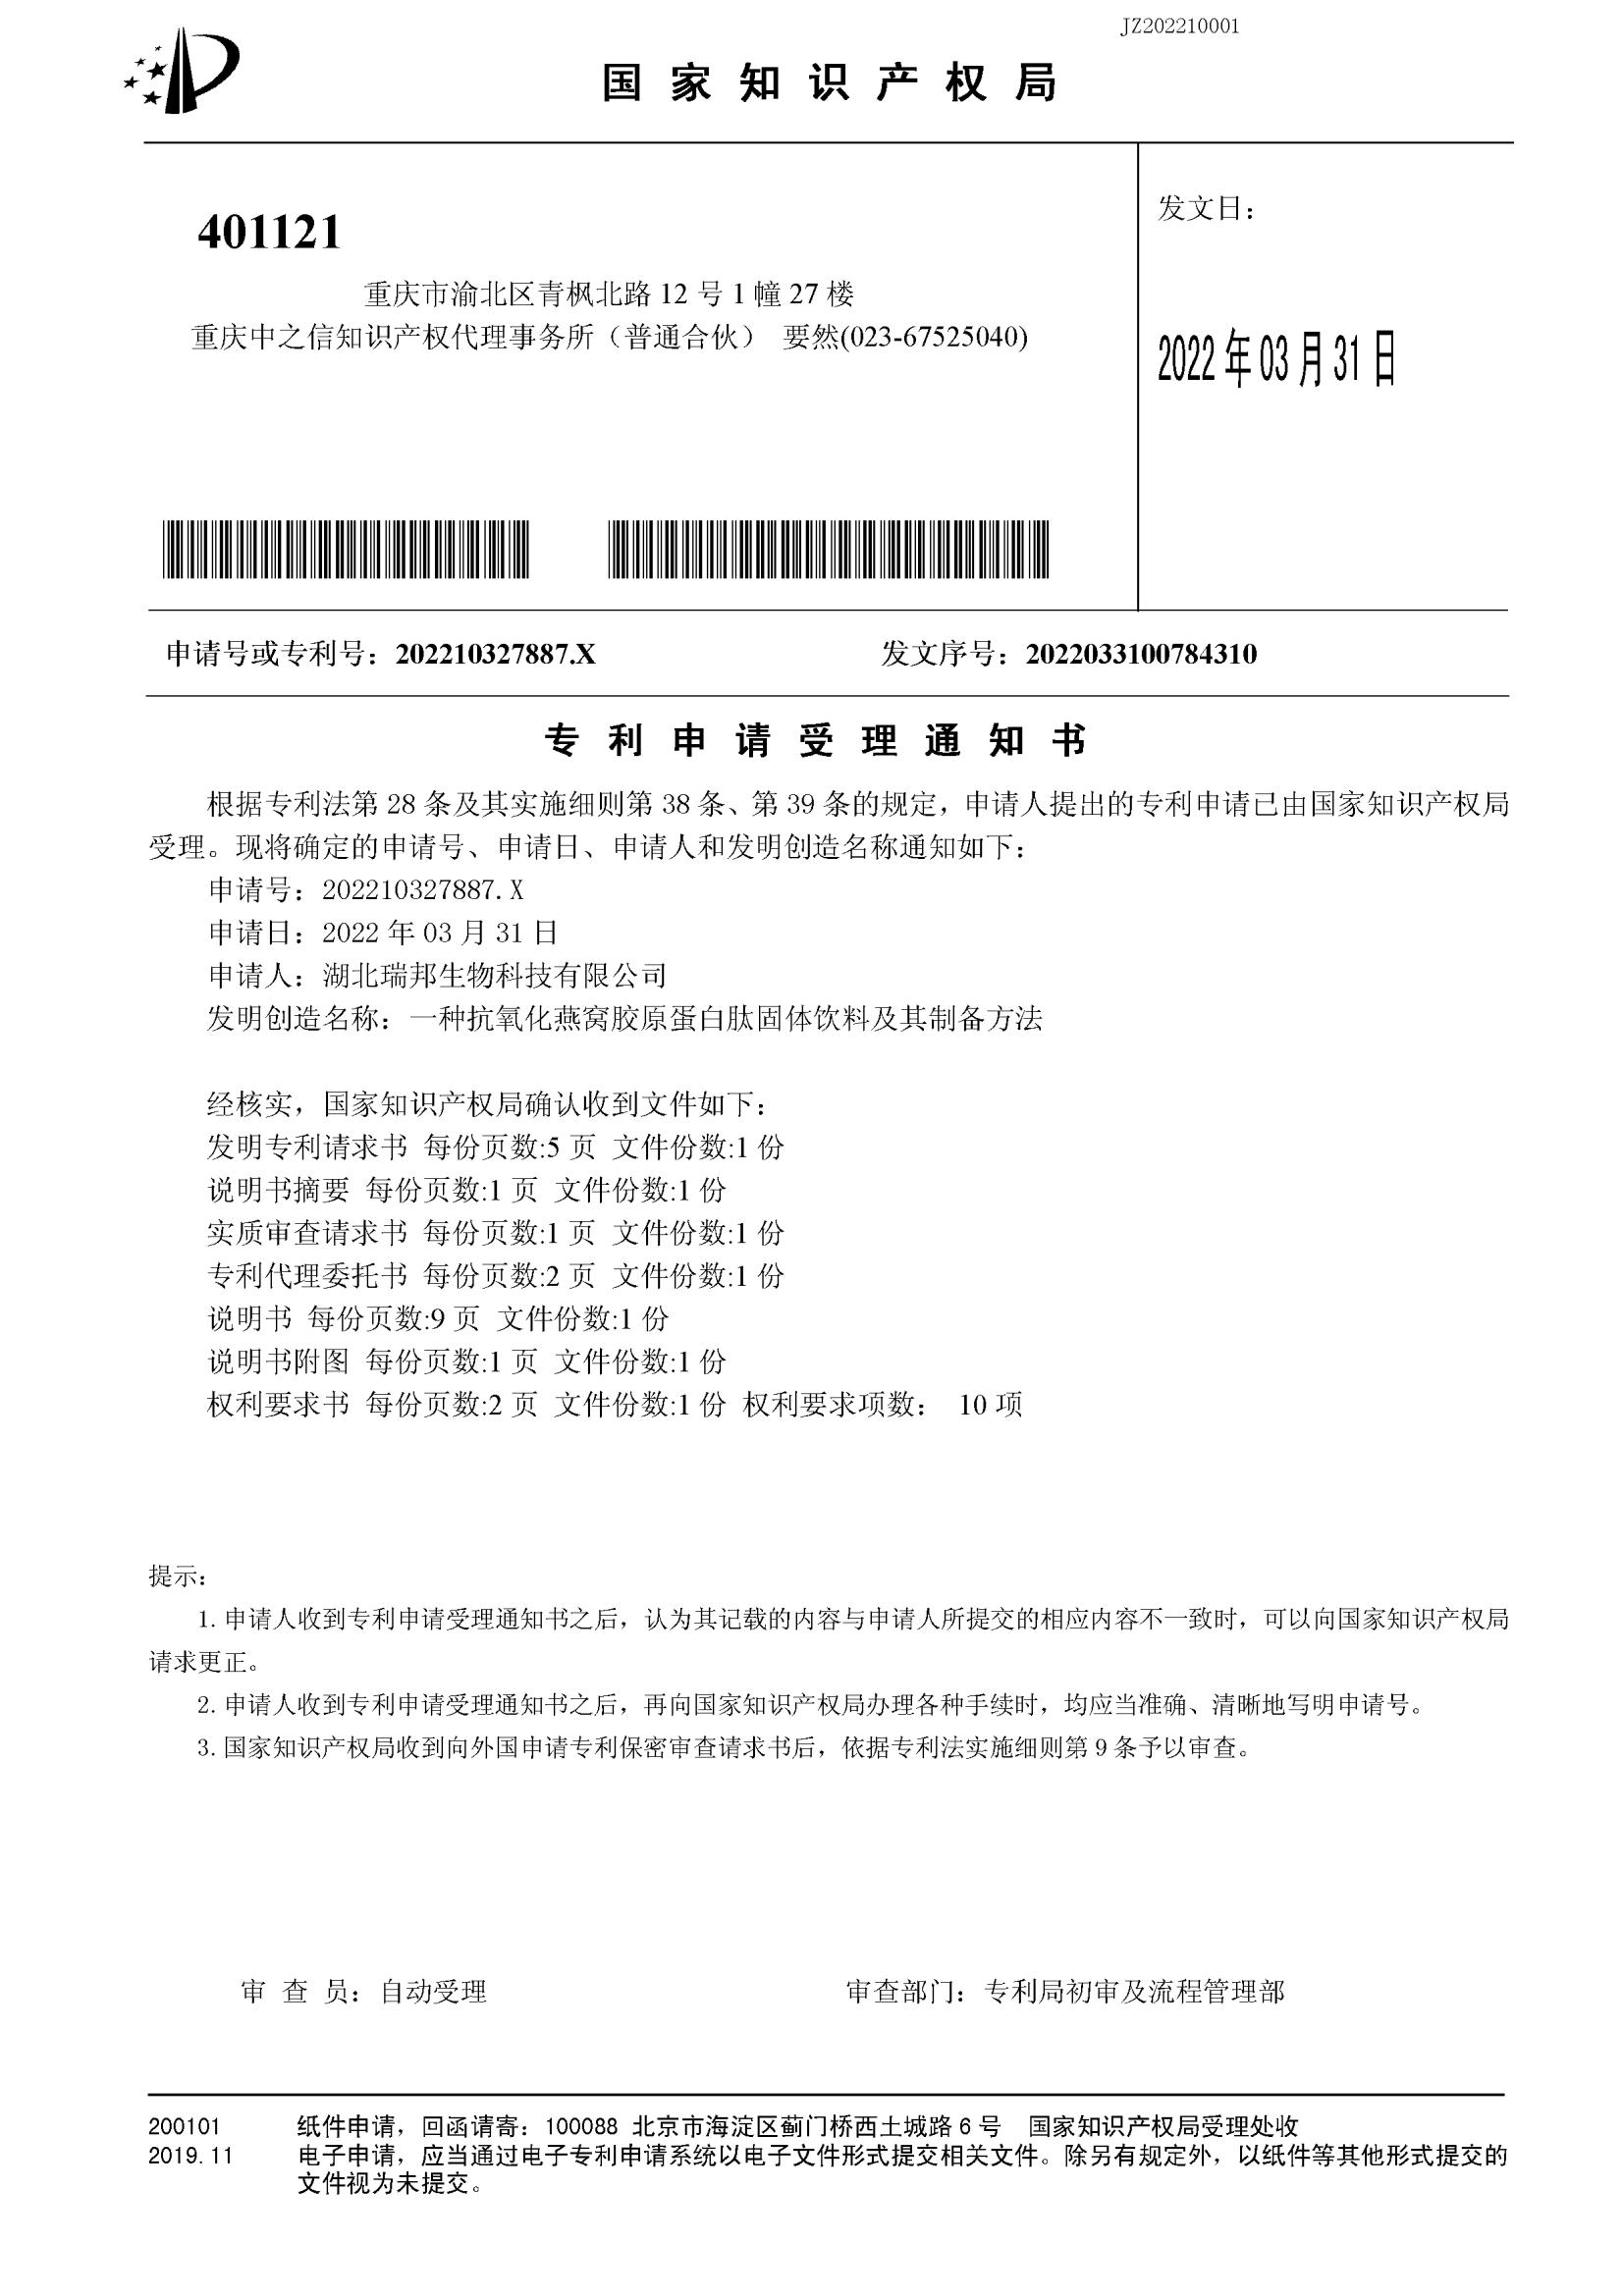 JZ202210001專利申請受理通知書_00.jpg